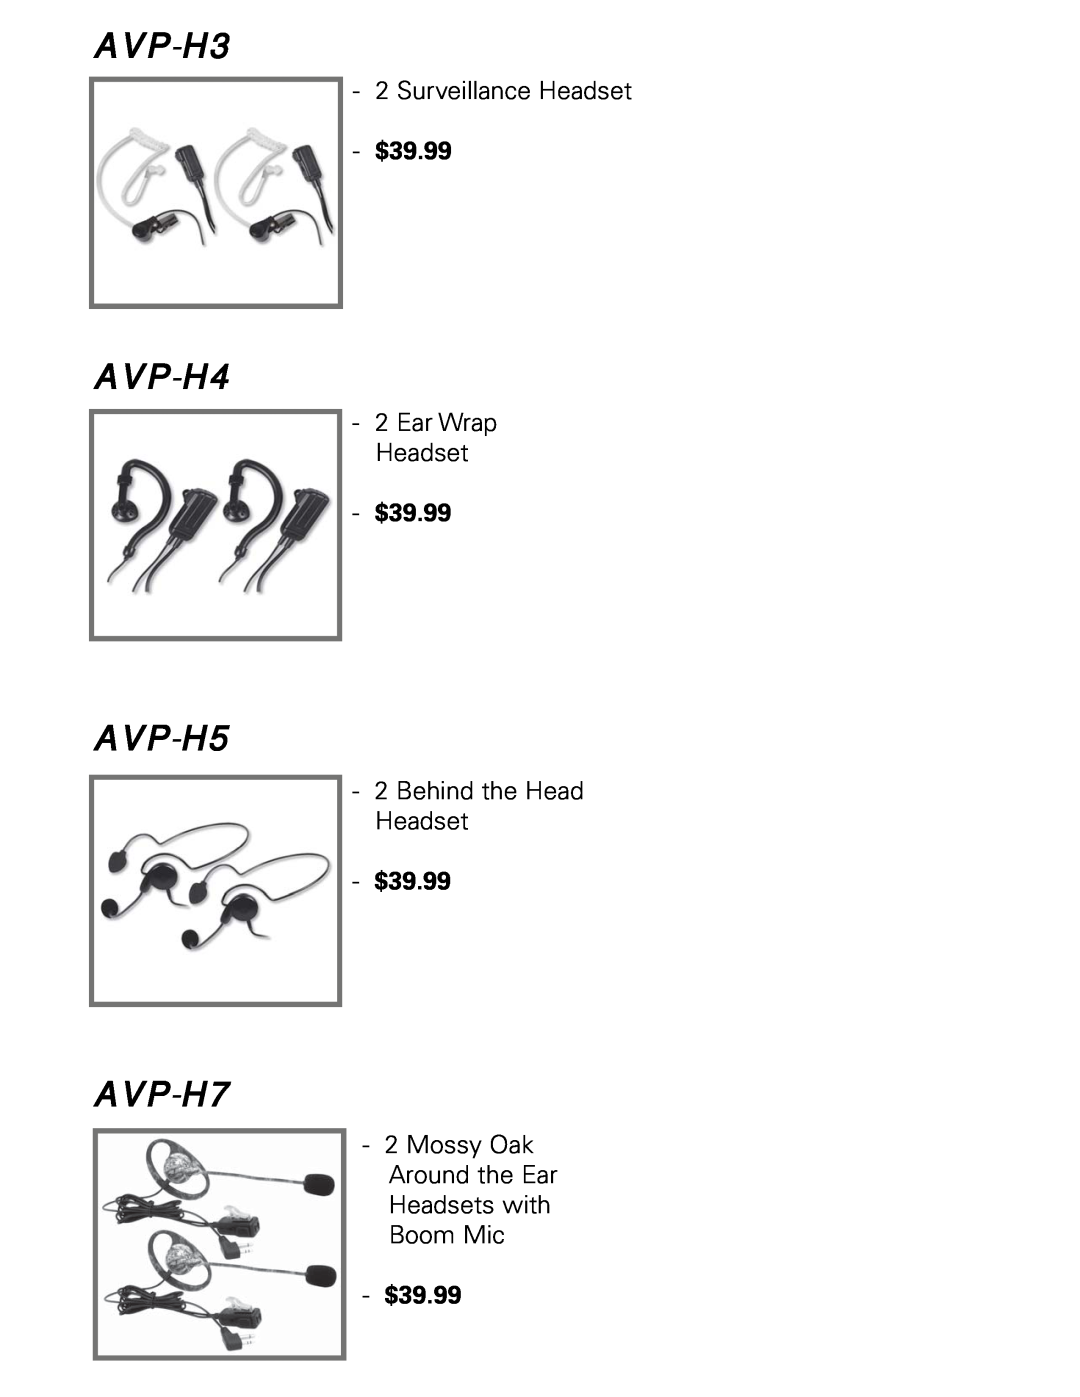 Midland Radio LXT112 Series owner manual AVP-H3, AVP-H4, AVP-H5, AVP-H7, Surveillance Headset, $39.99, Ear Wrap Headset 